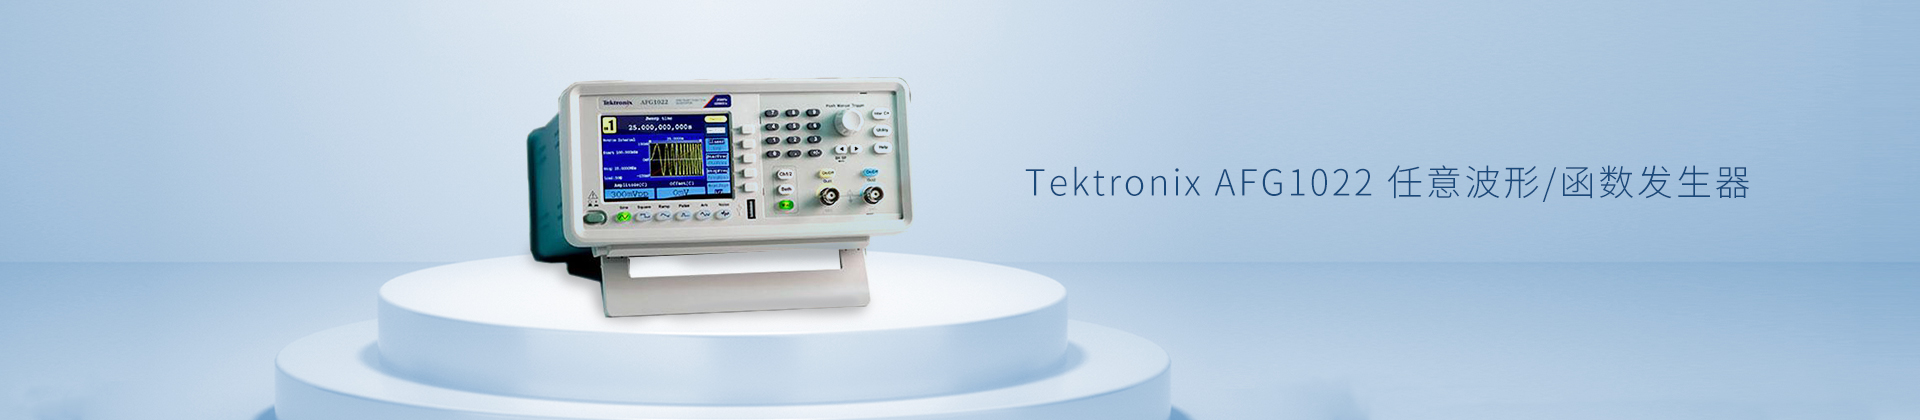 Tektronix AFG1022 任意波形/函数发生器